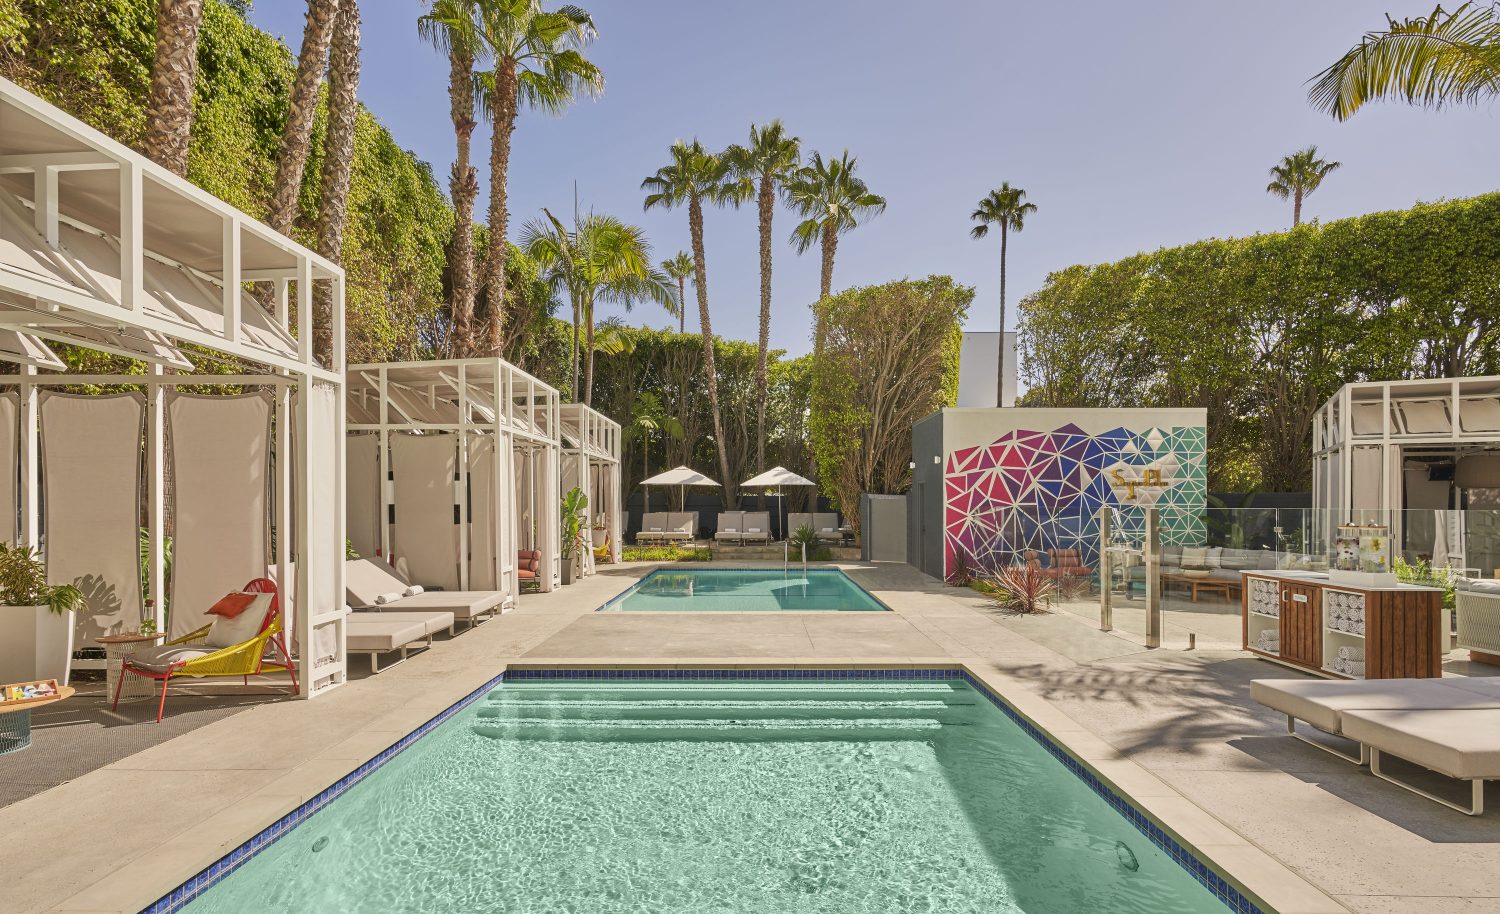 pool, cabana, palm trees